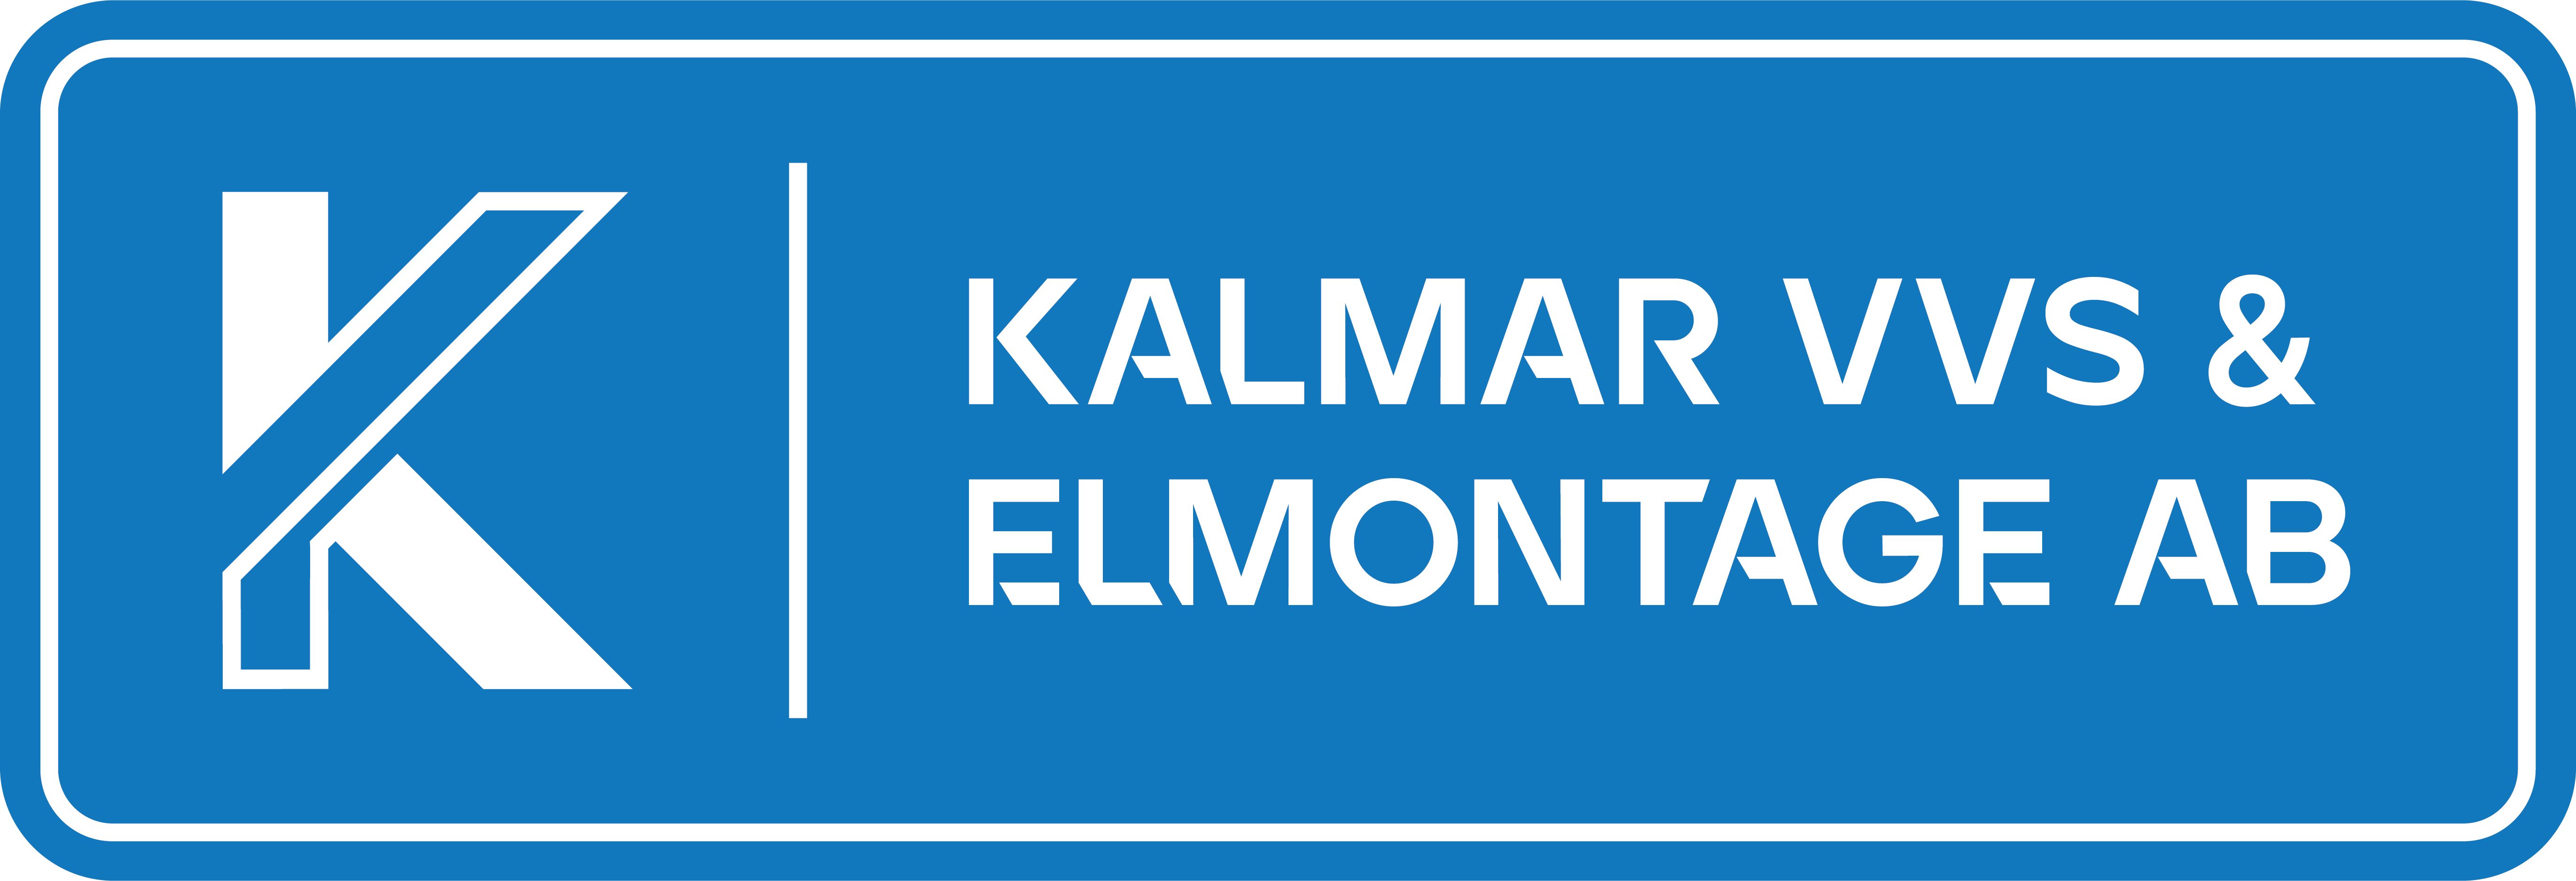 Kalmar VVS & Elmontage AB